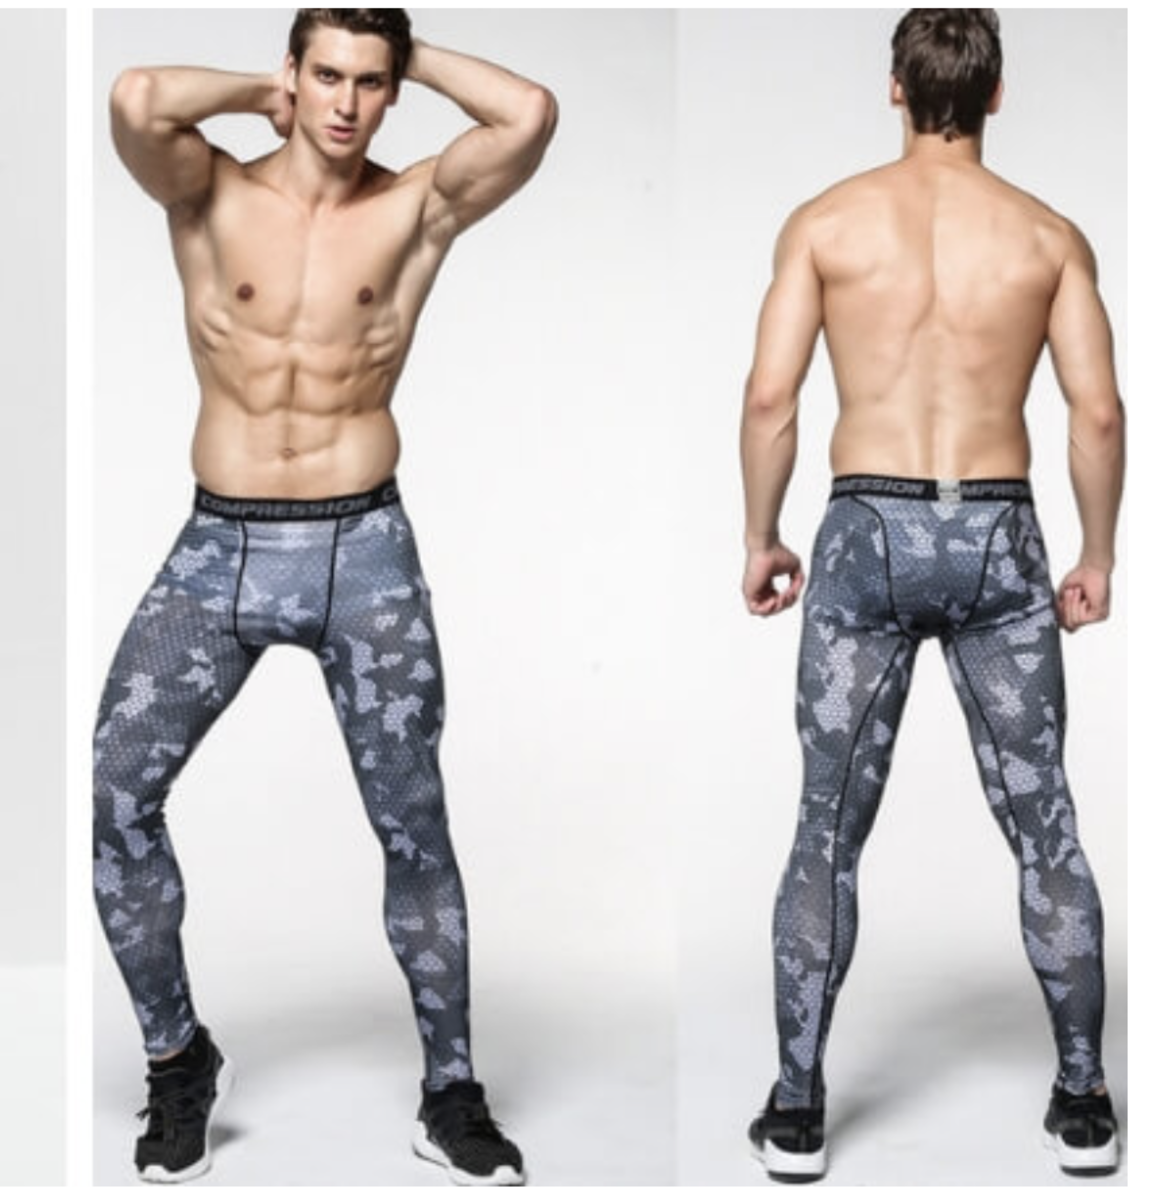 Tights worn under shorts for men - HubPages